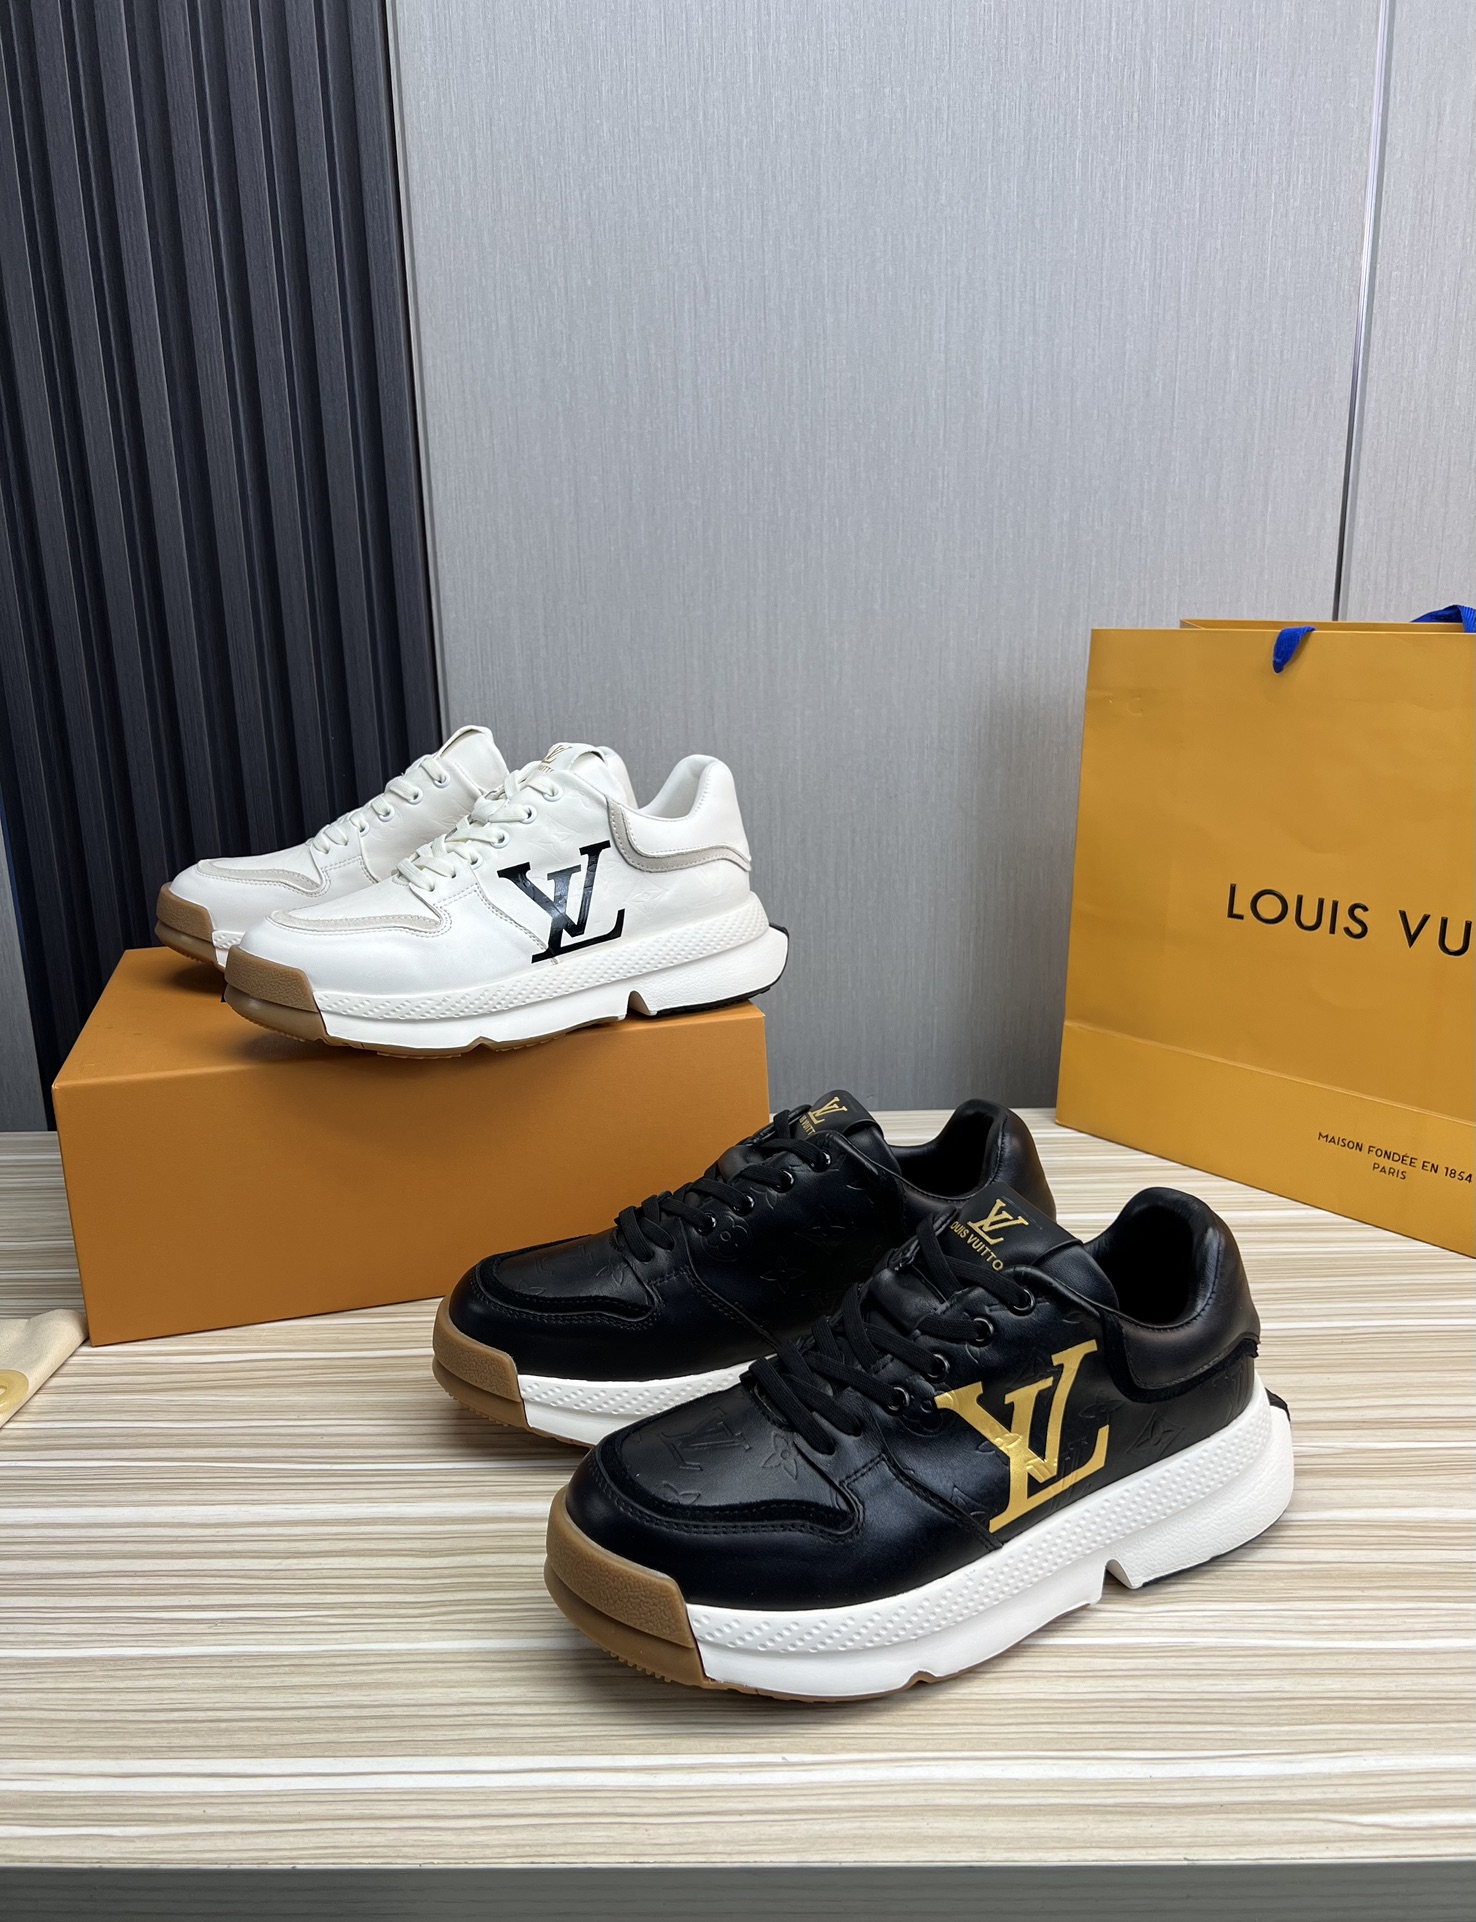 Louis Vuitton Skateboard Shoes Men Cowhide Genuine Leather Rubber Fashion Casual